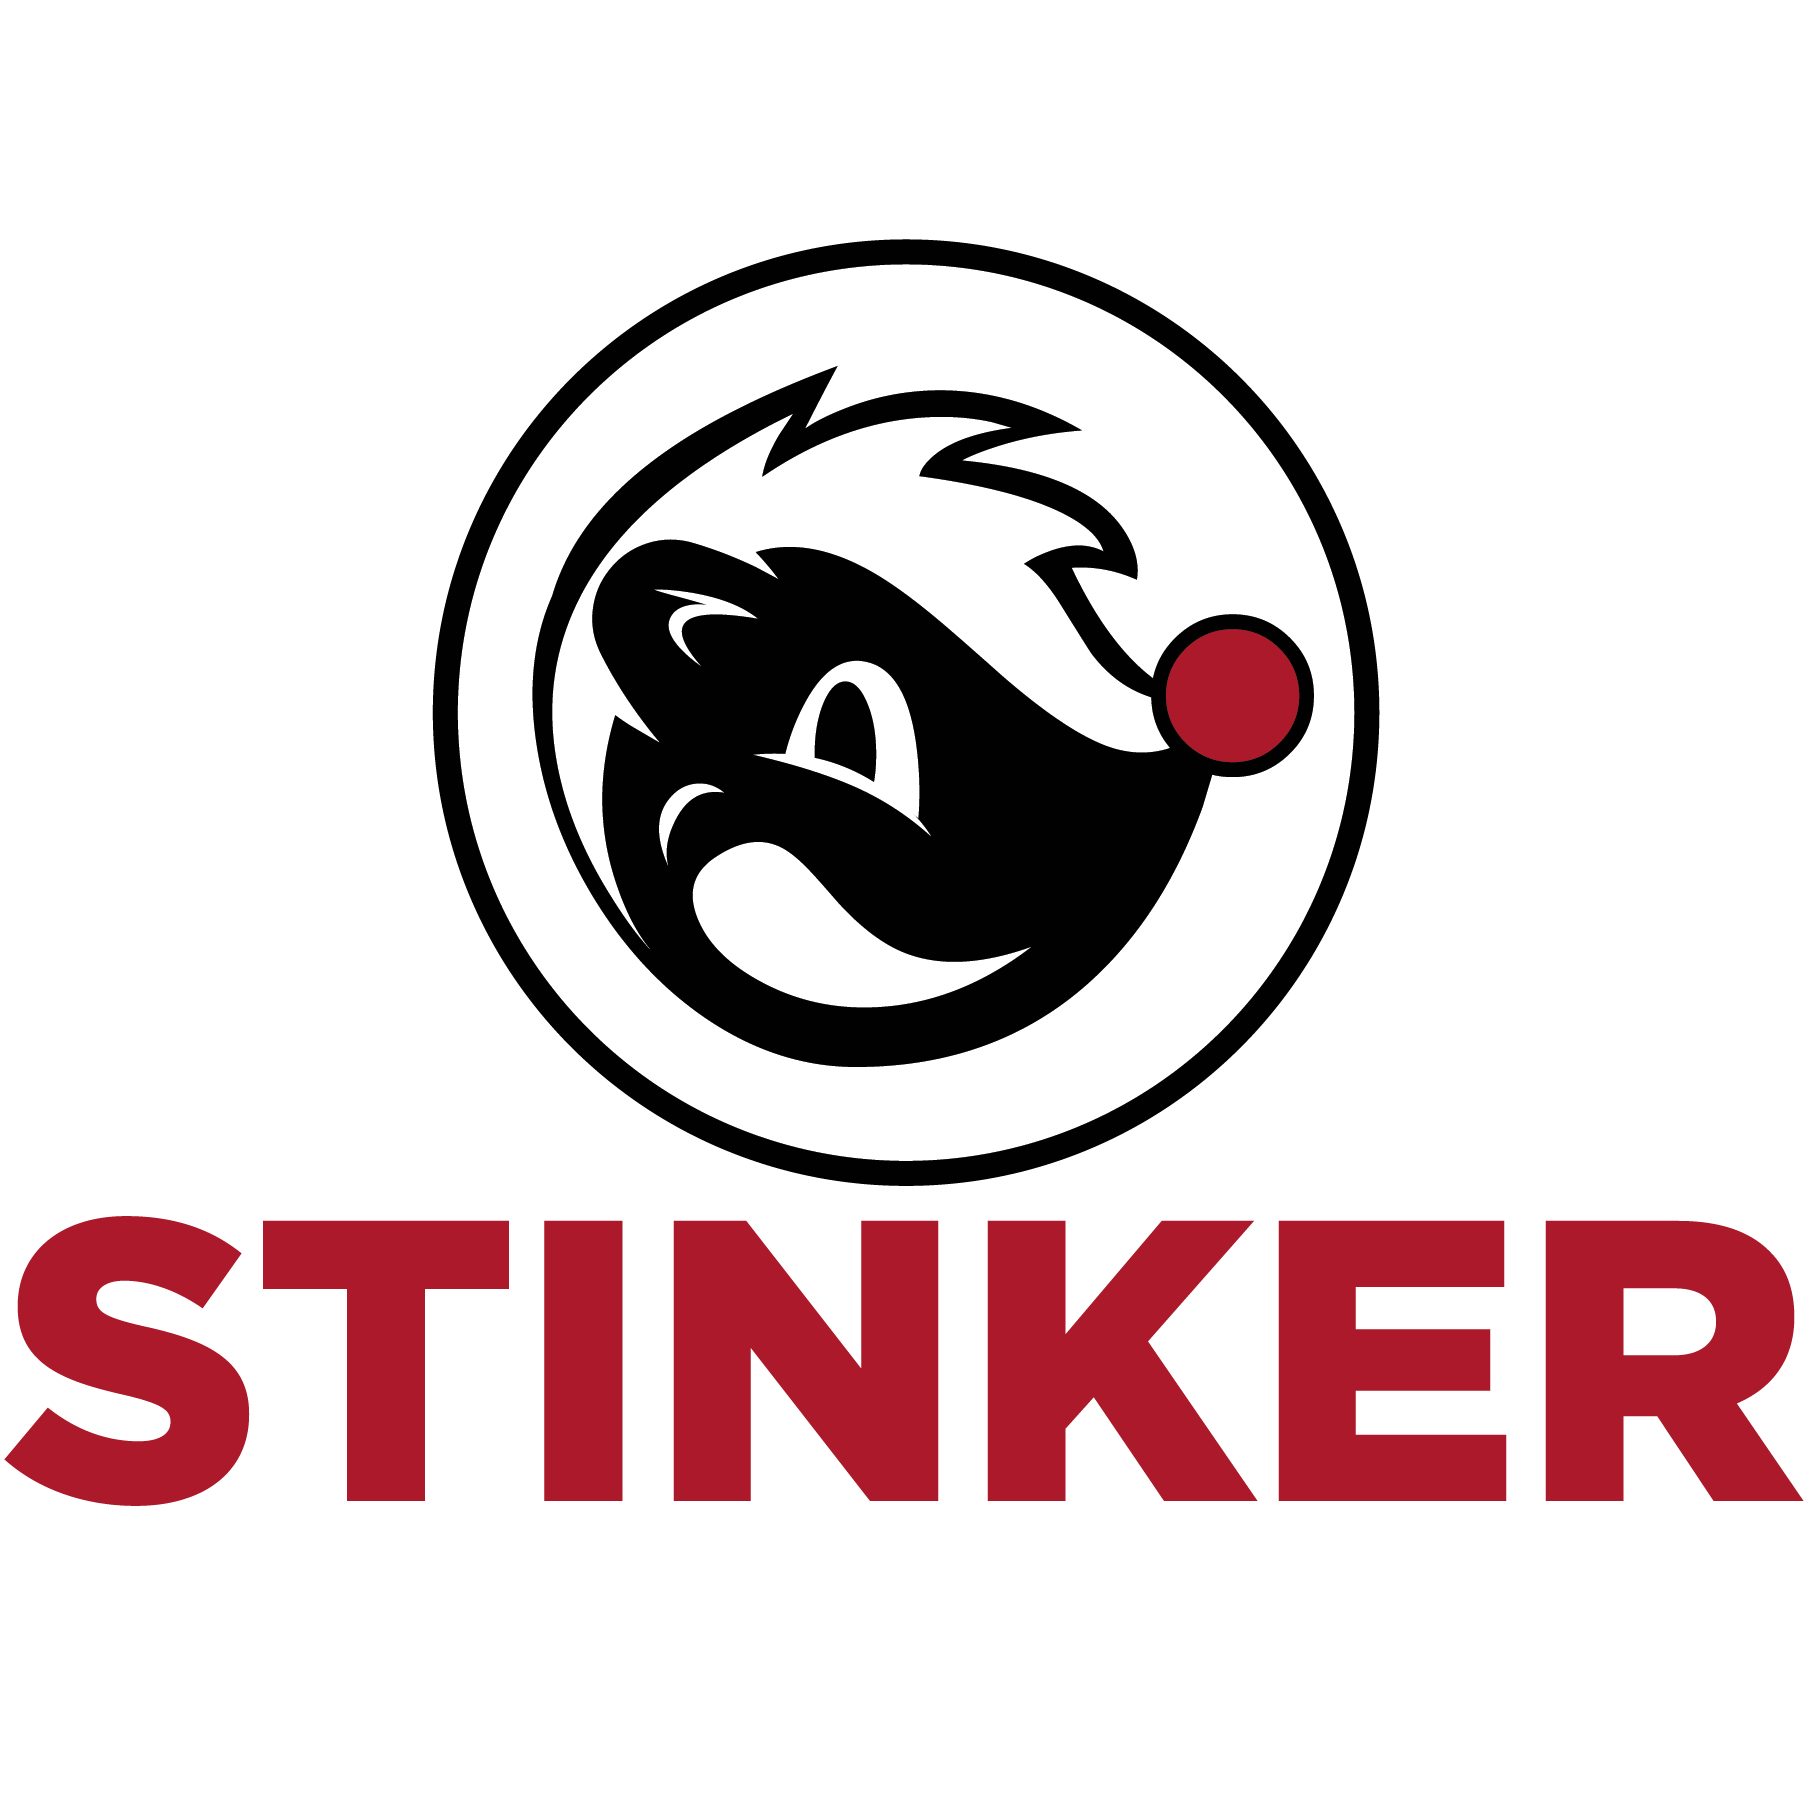 Stinker Cardlock Fueling Station - Rawlins, WY 82301-5845 - (307)326-8551 | ShowMeLocal.com